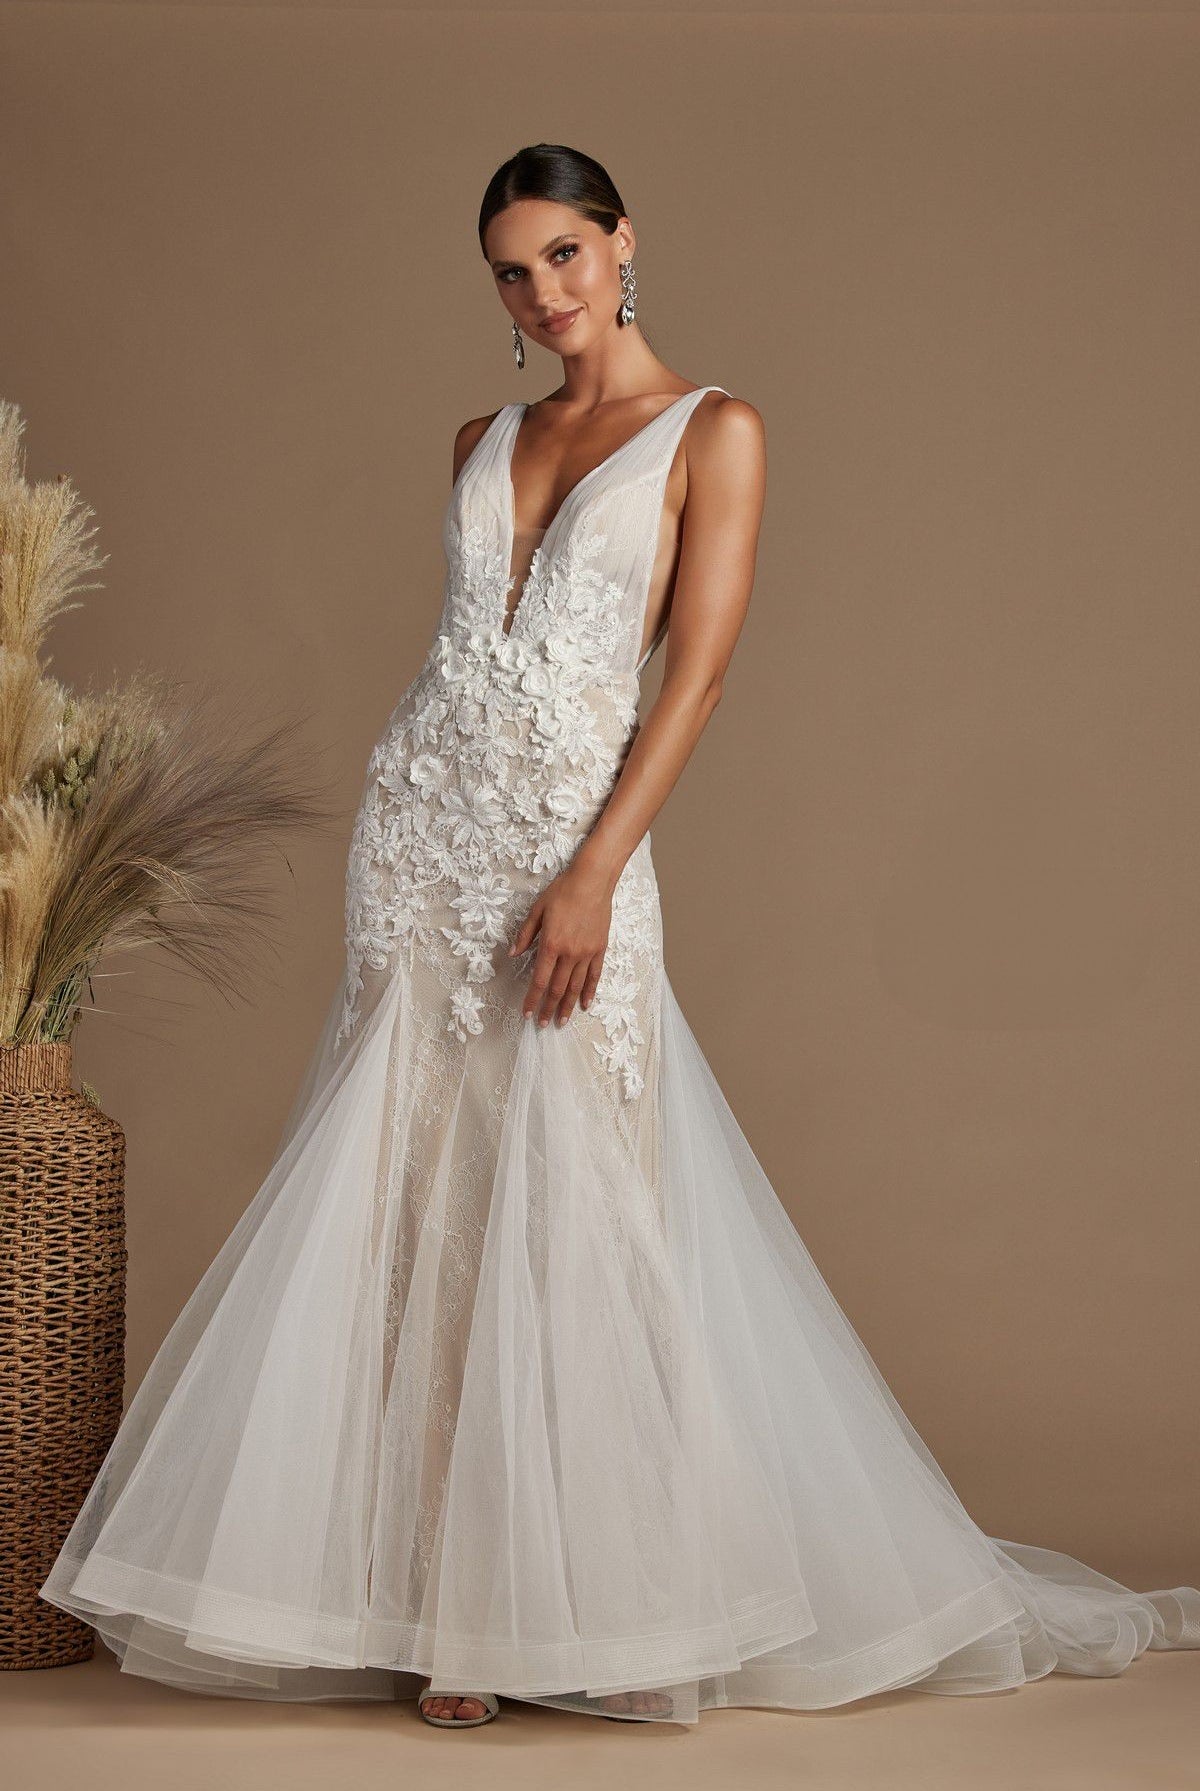 Embroidered Lace Tulle Skirt Open V-Back Long Wedding Dress NXJE917-Wedding Dress-smcfashion.com